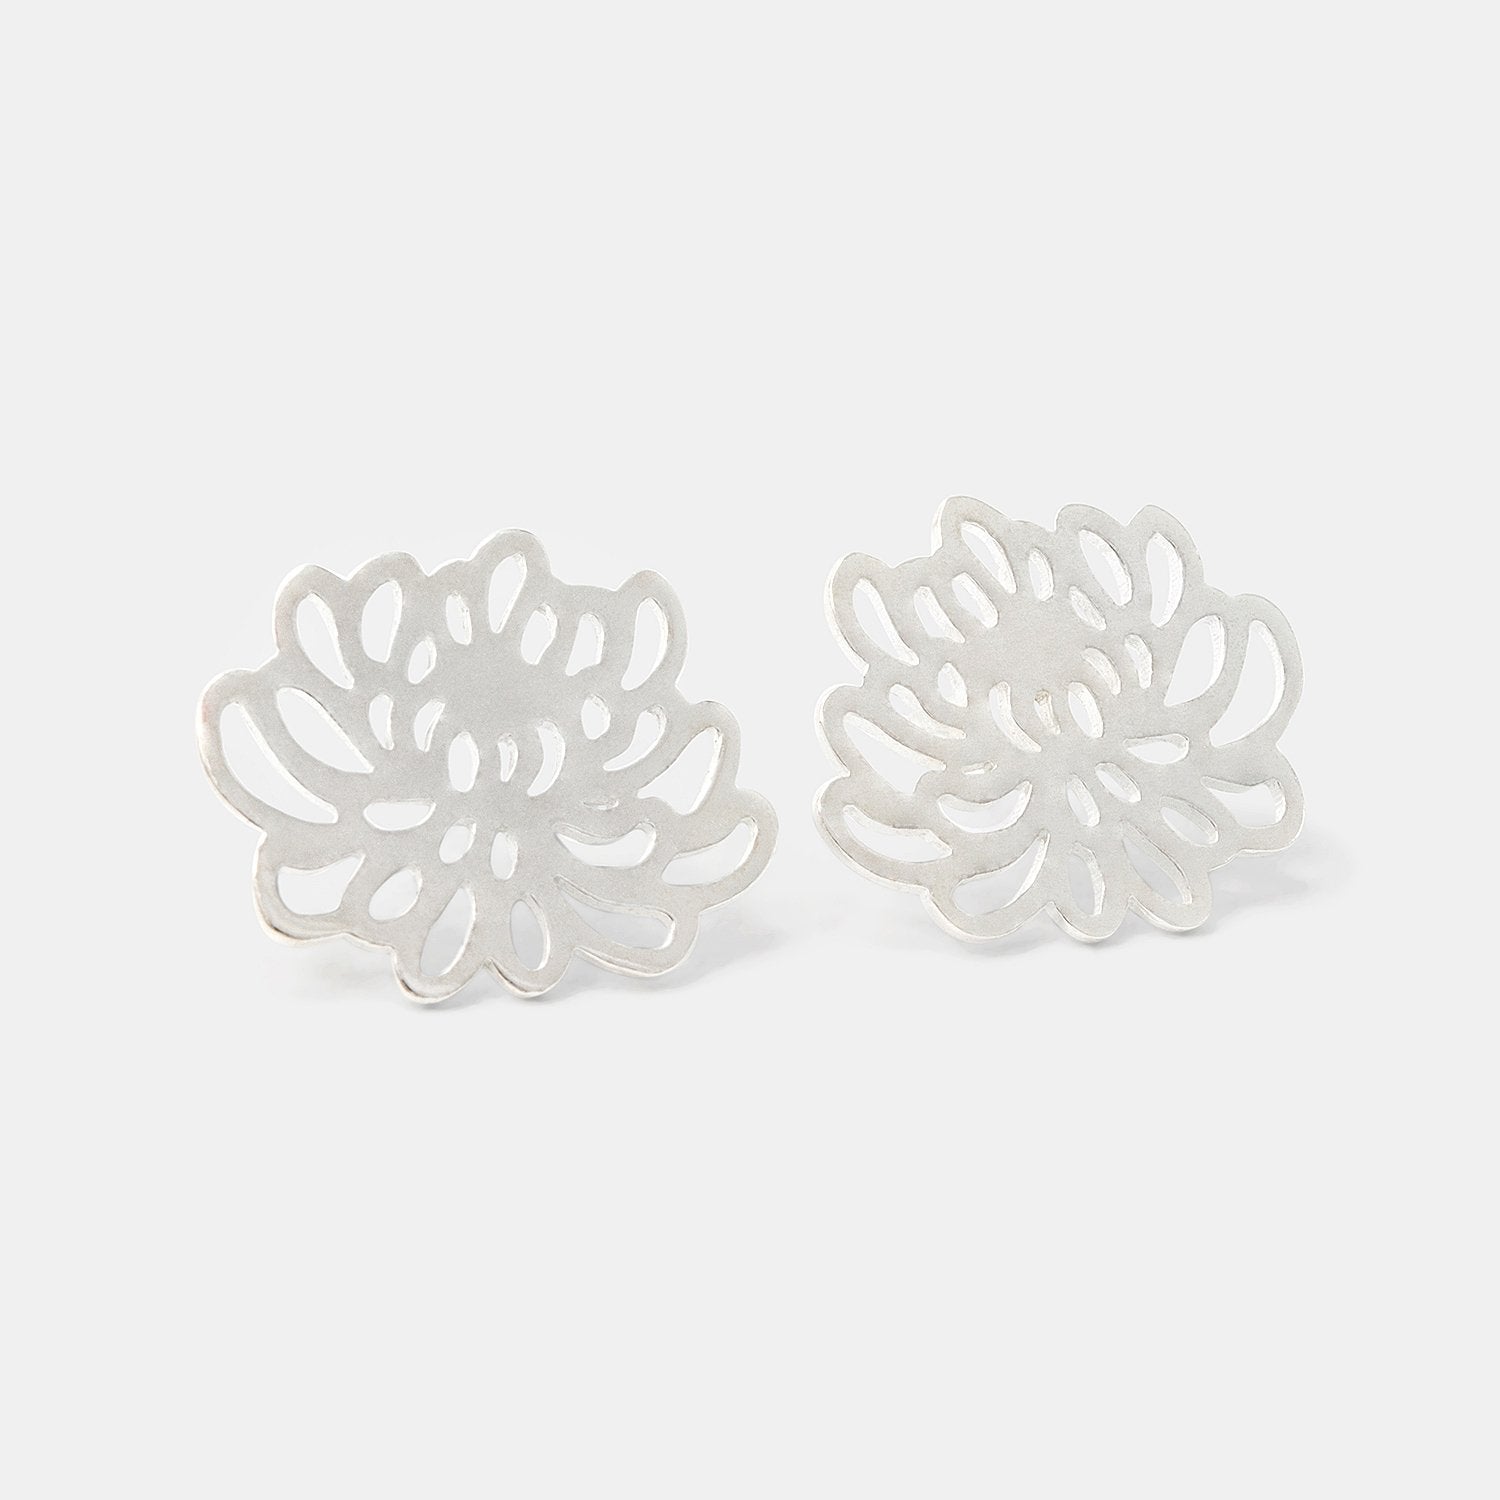 Chrysanthemum stud earrings - Simone Walsh Jewellery Australia